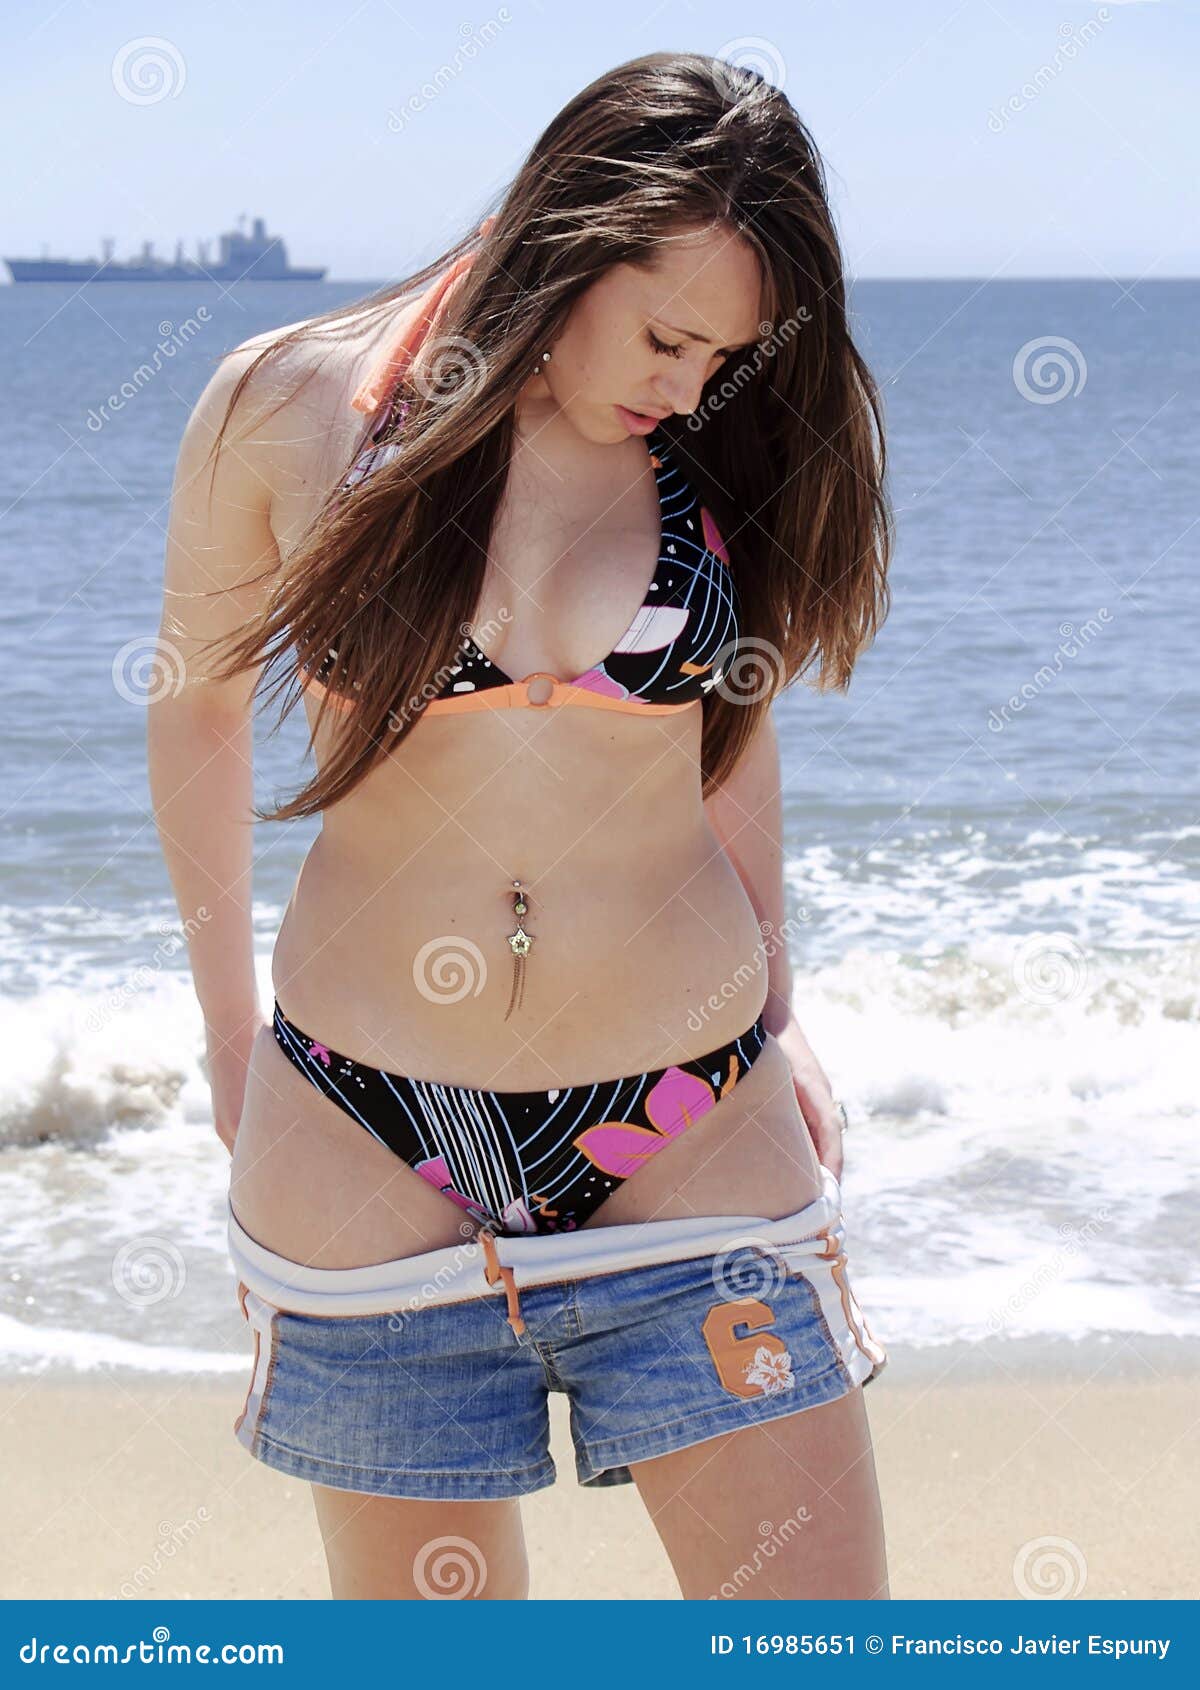 girls undressing beach voyeur